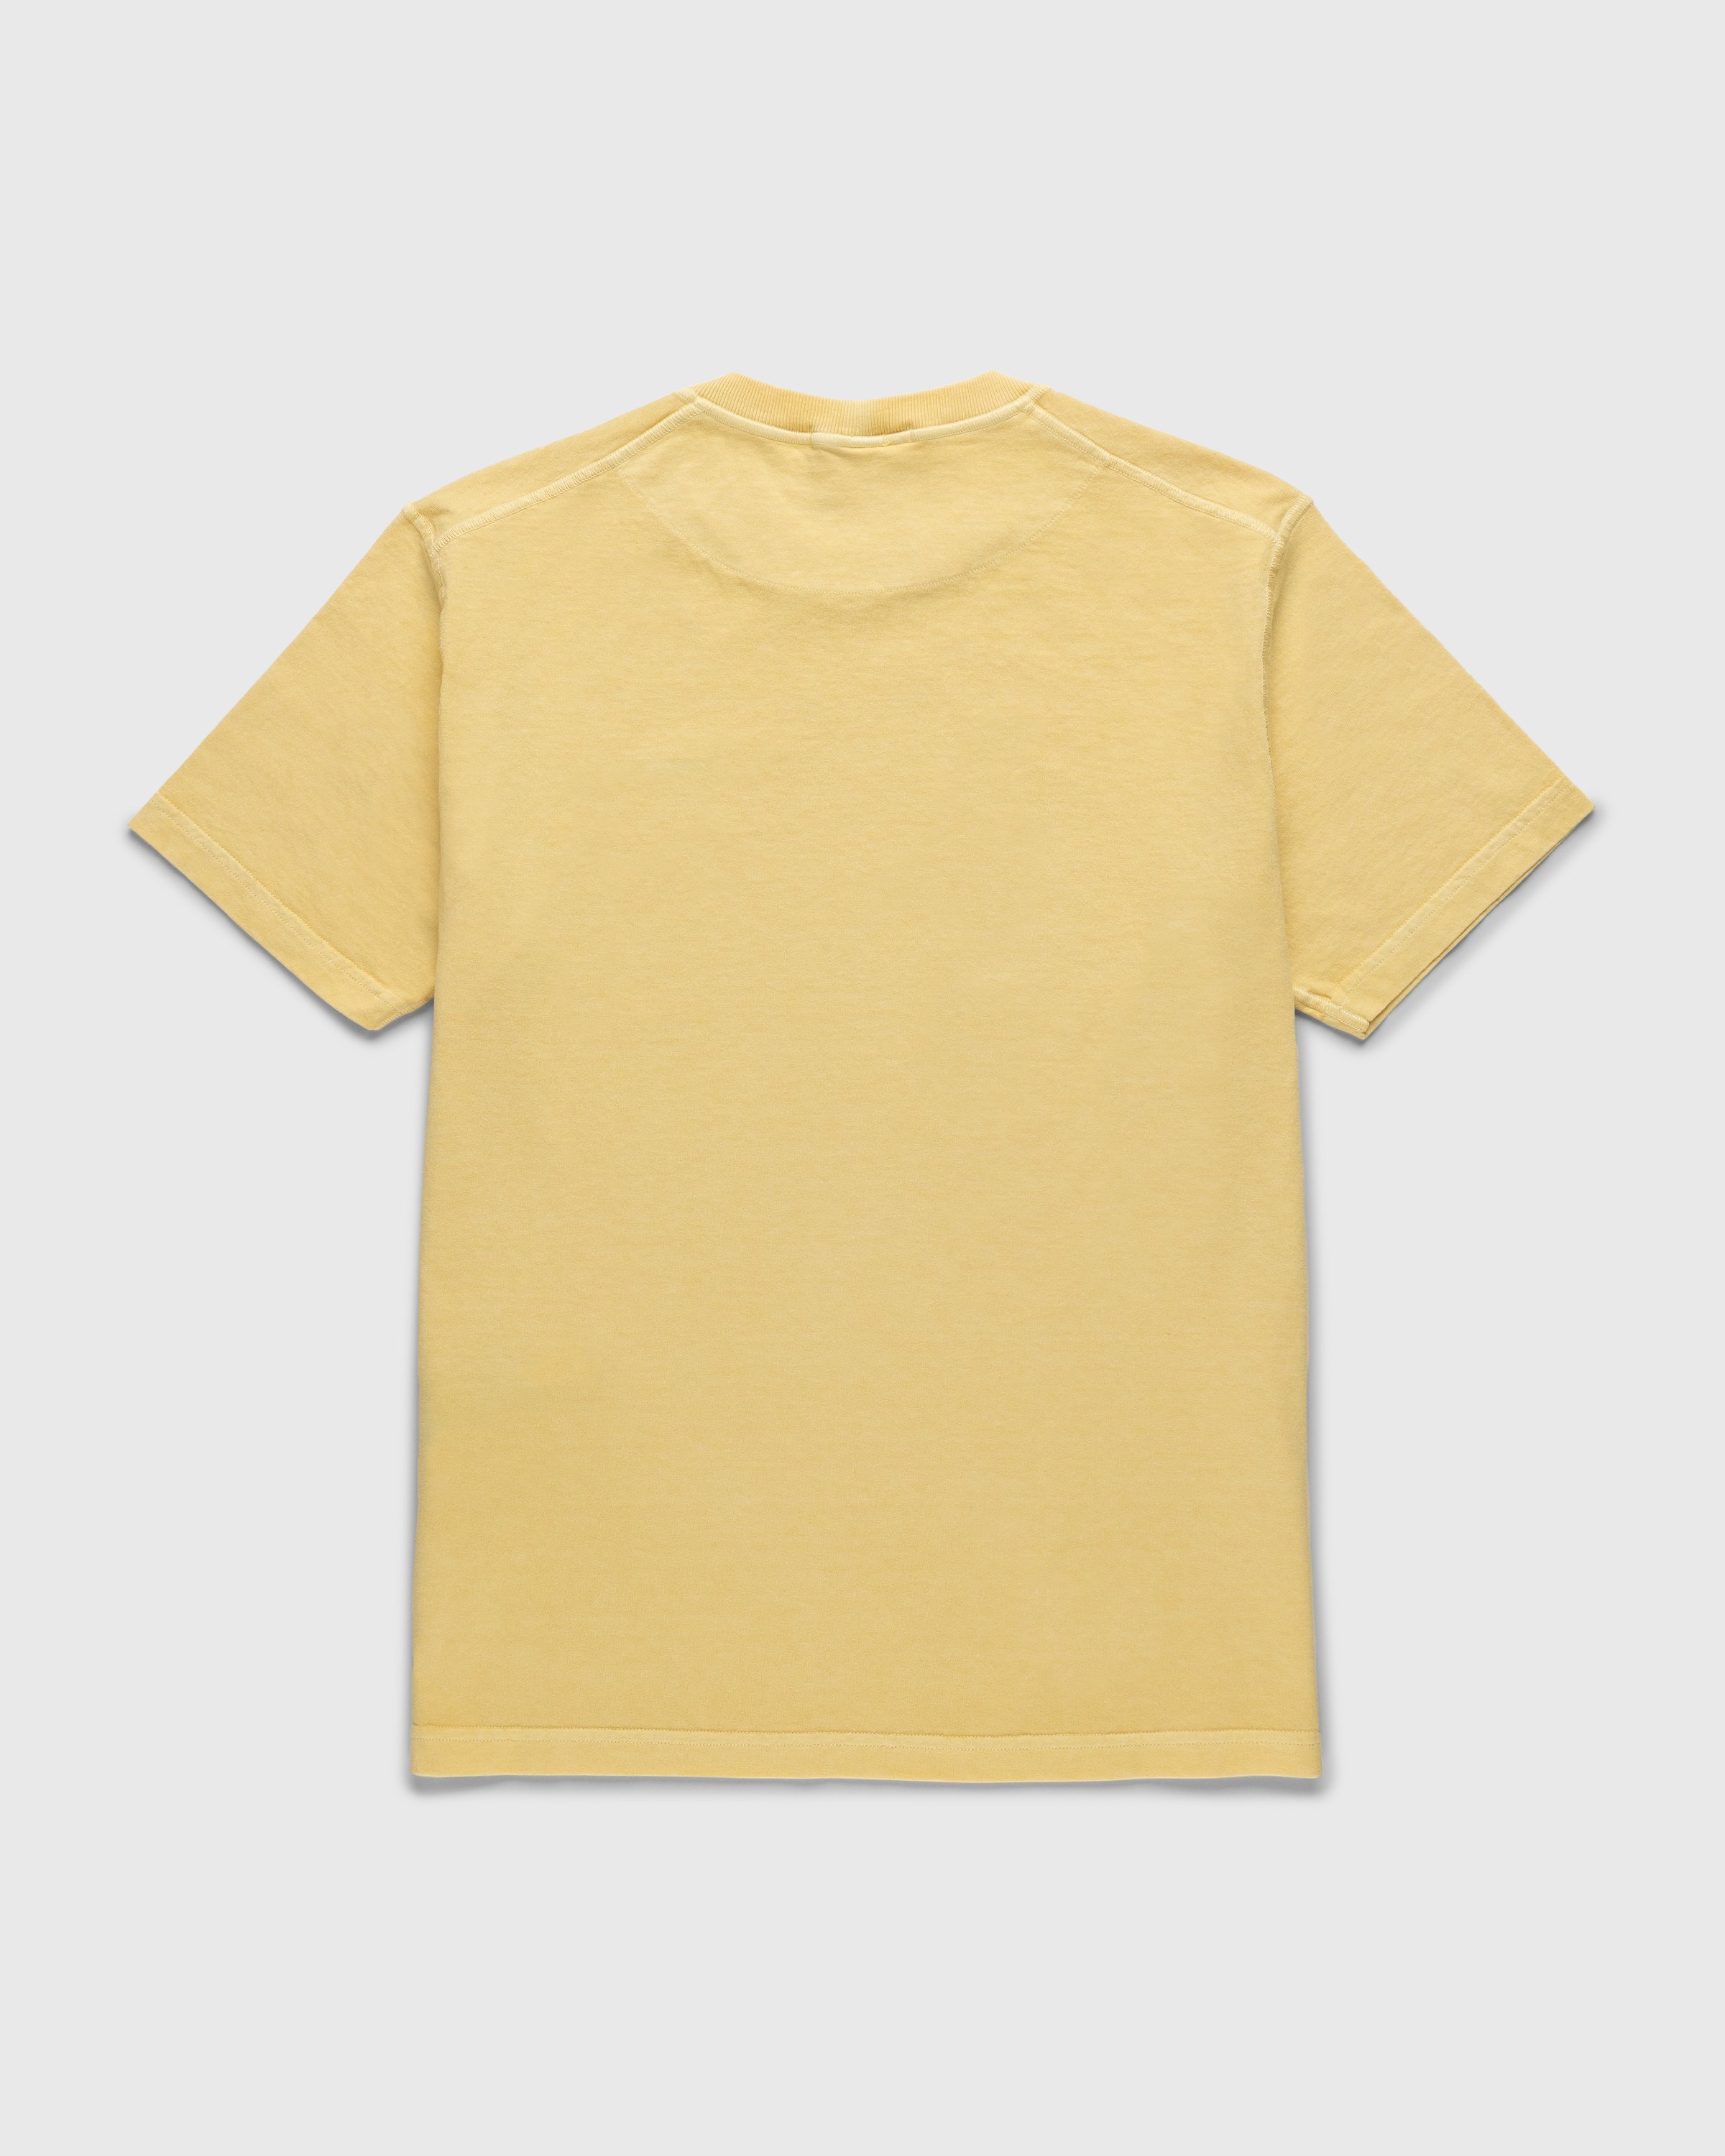 Stone Island - Fissato T-Shirt Butter - Clothing - Yellow - Image 2